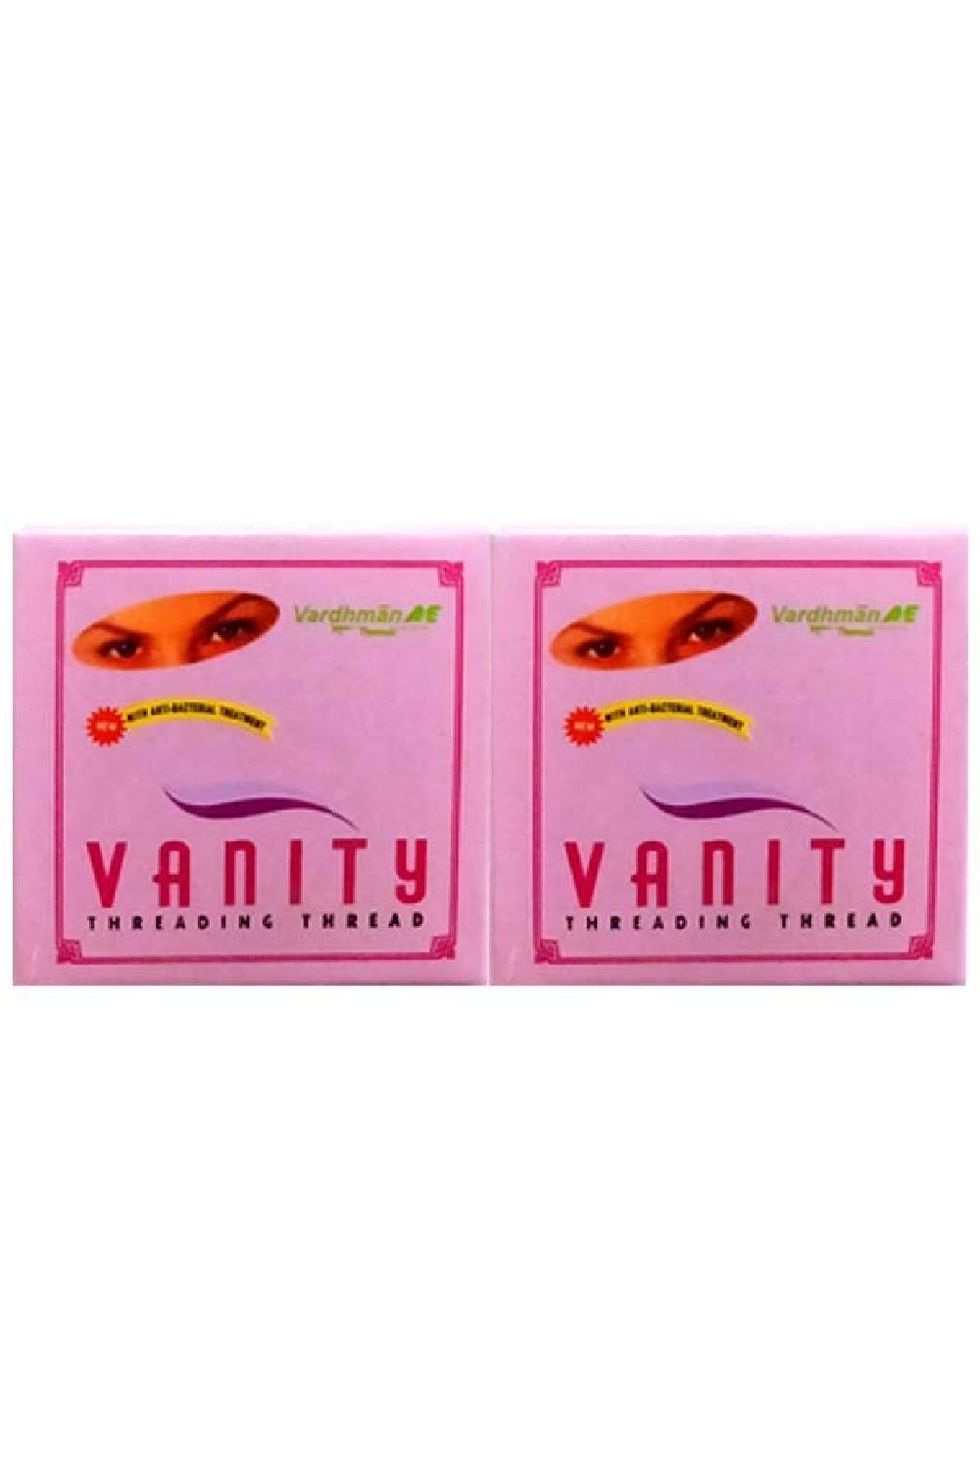 Vanity Eyebrow Threading Thread -Pack of 5 boxes (10 Spools each)